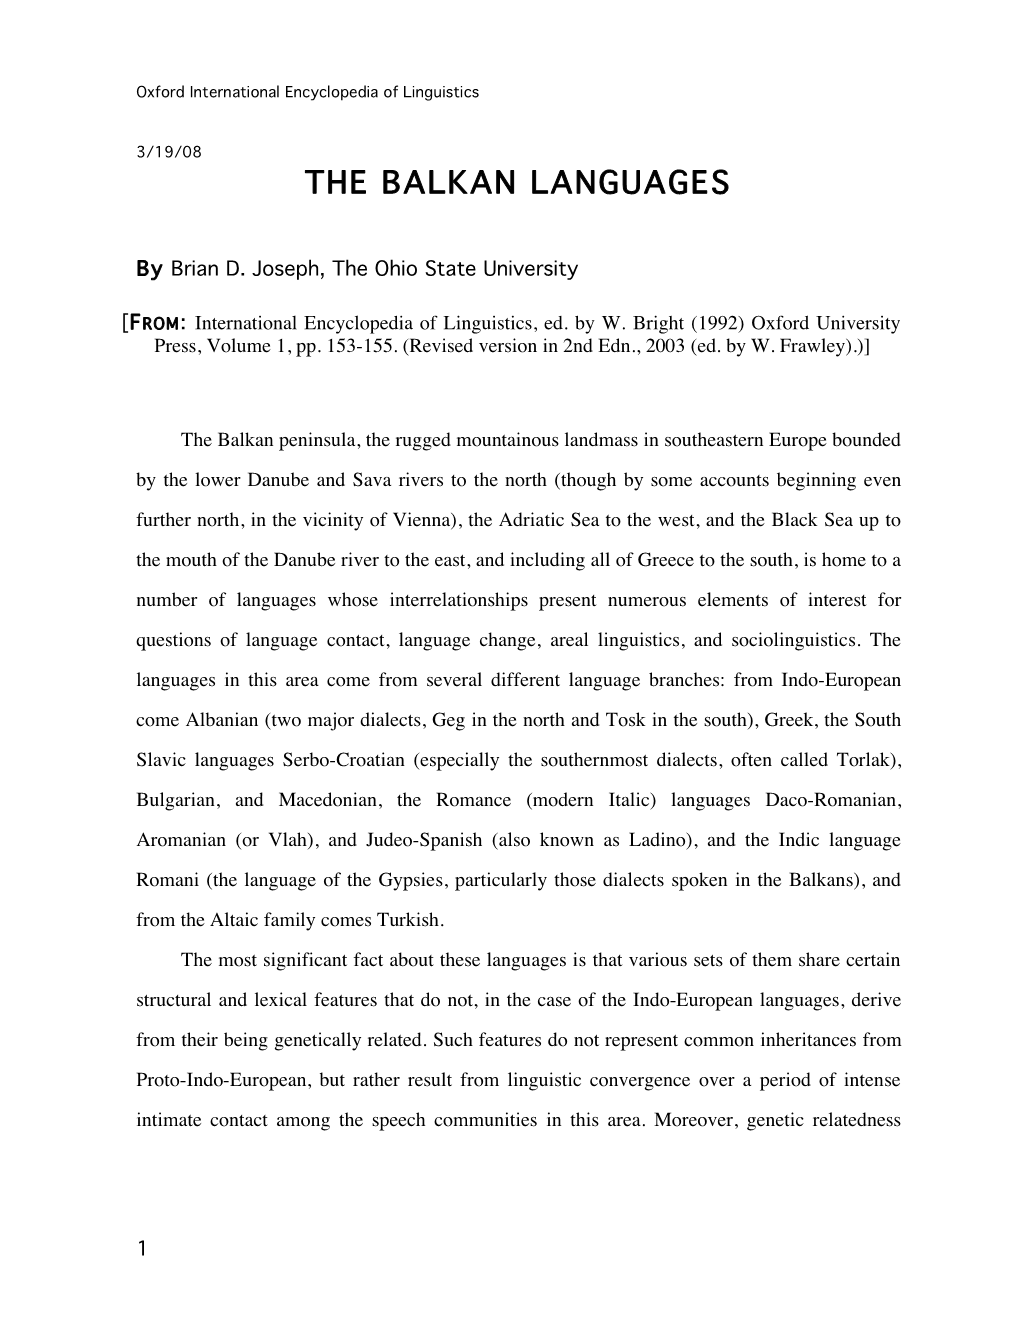 The Balkan Languages